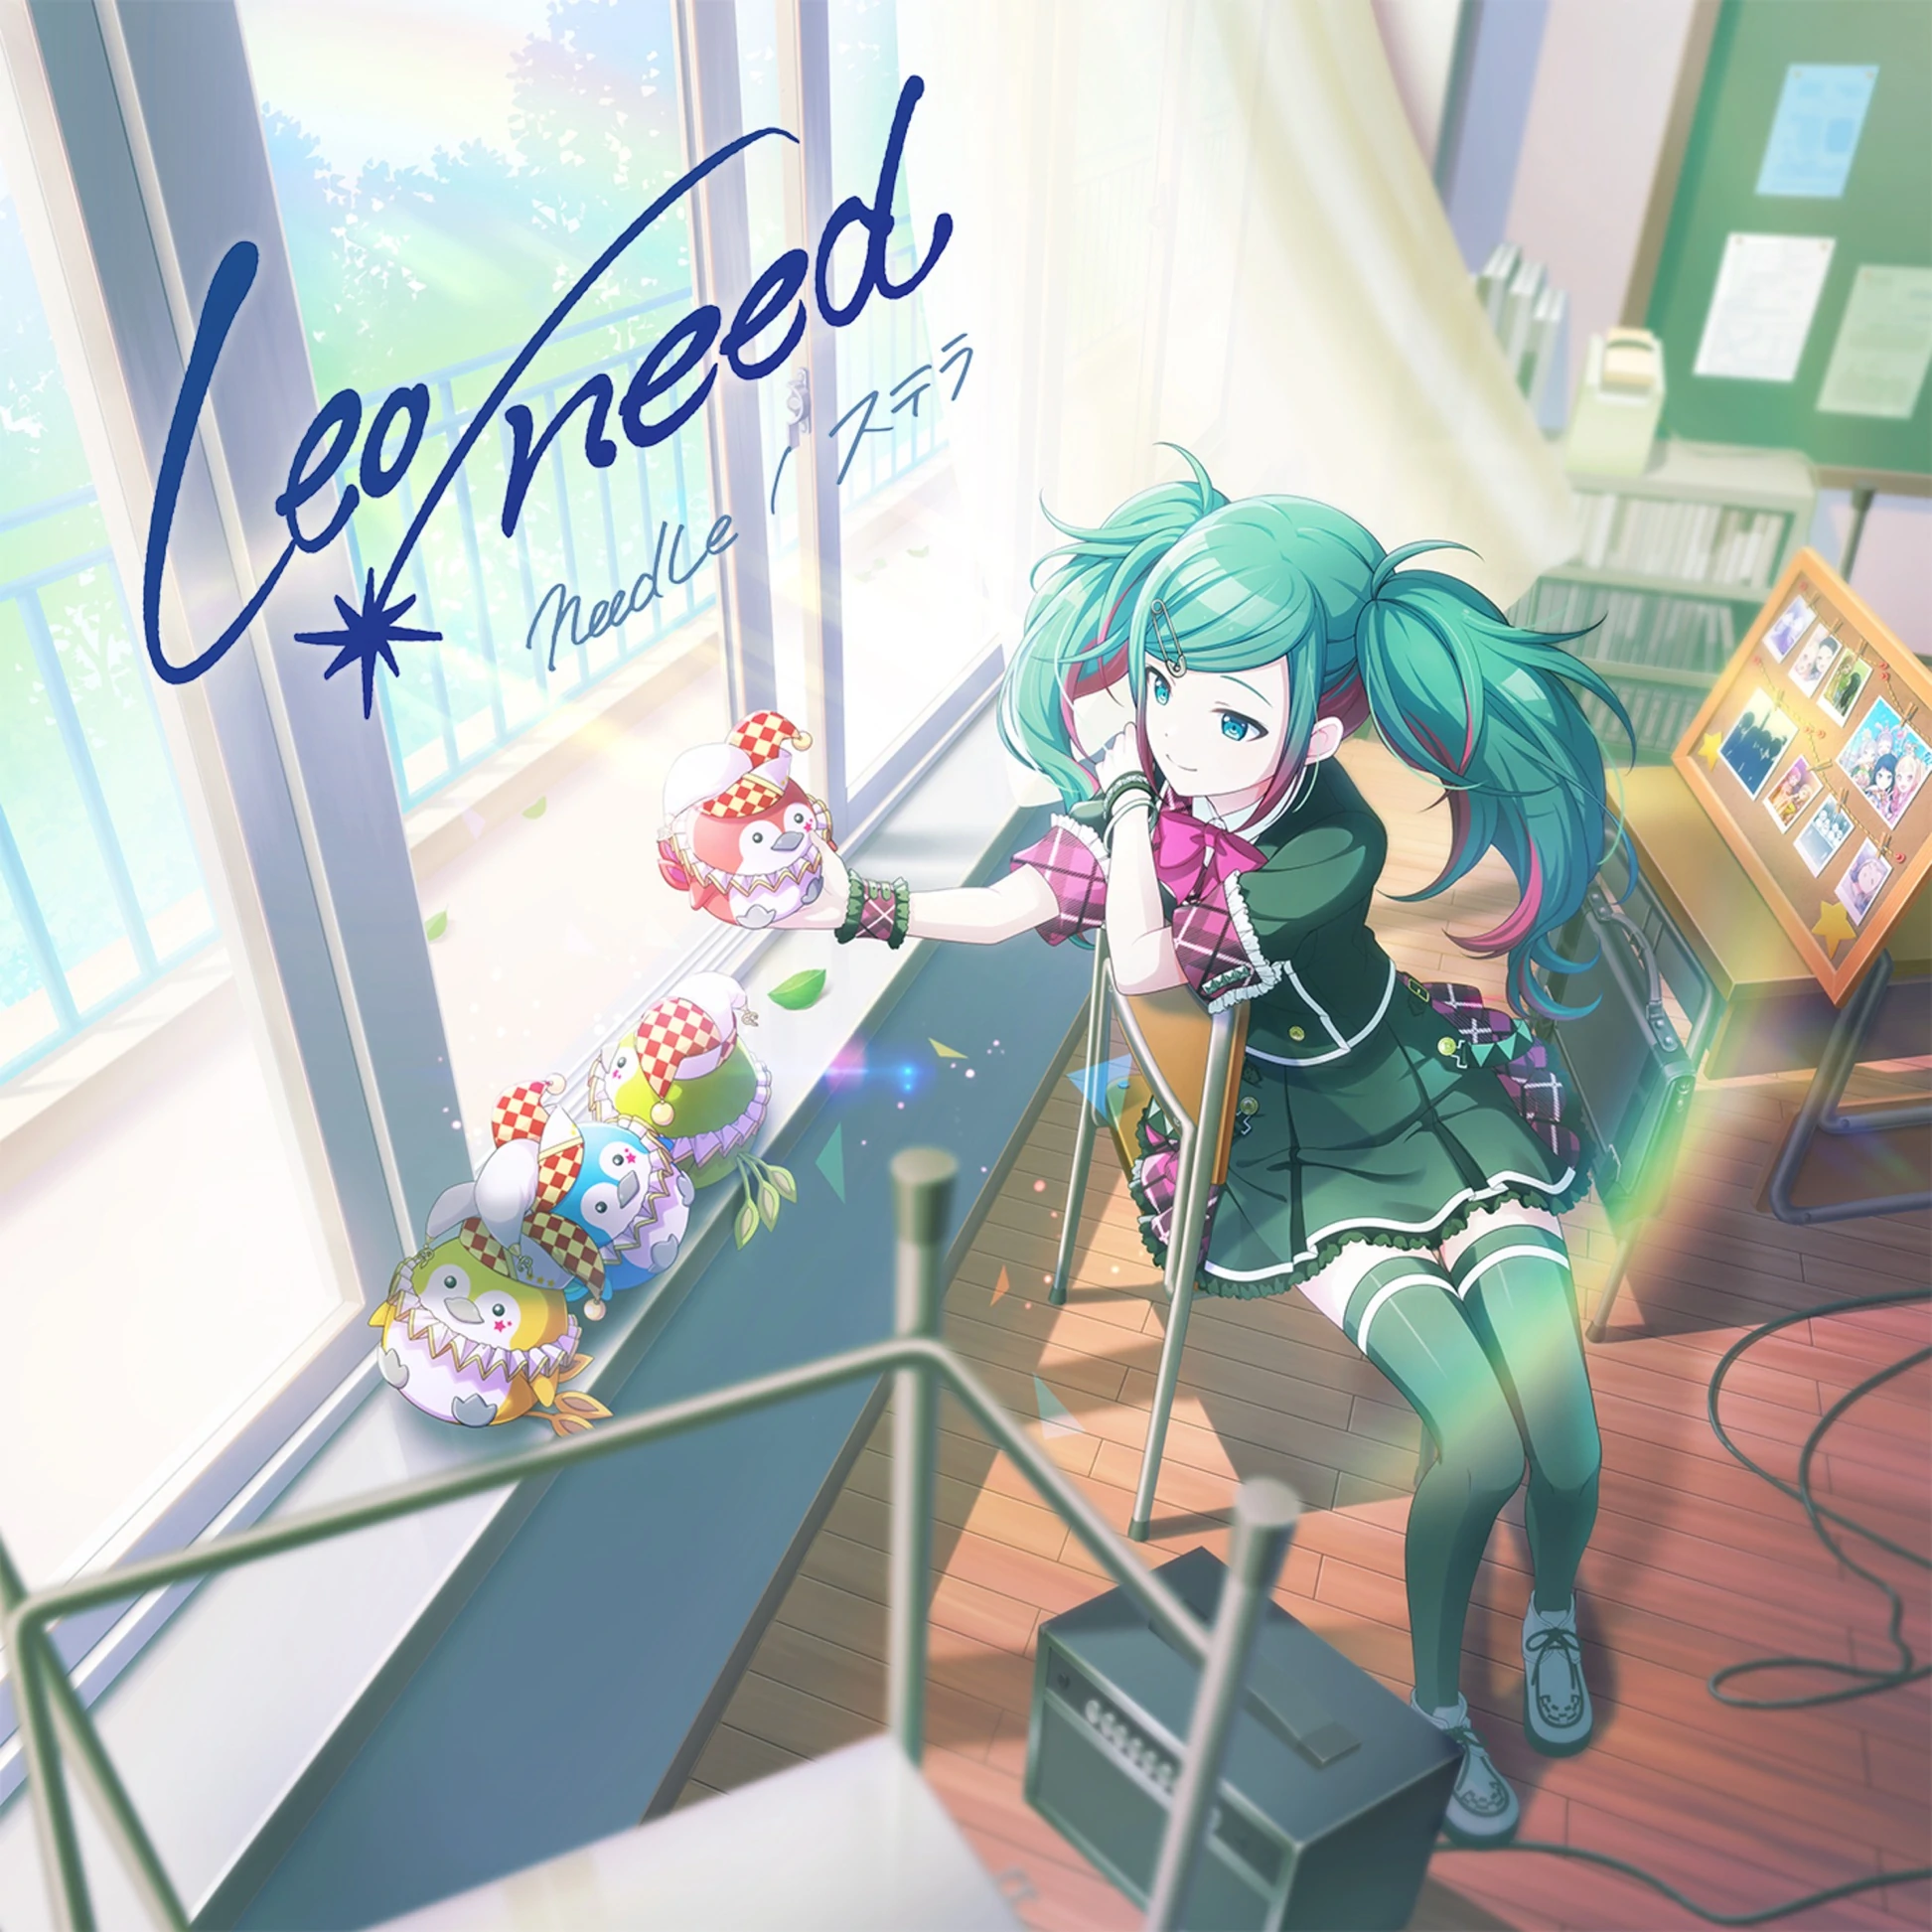 Leo/need — needLe cover artwork